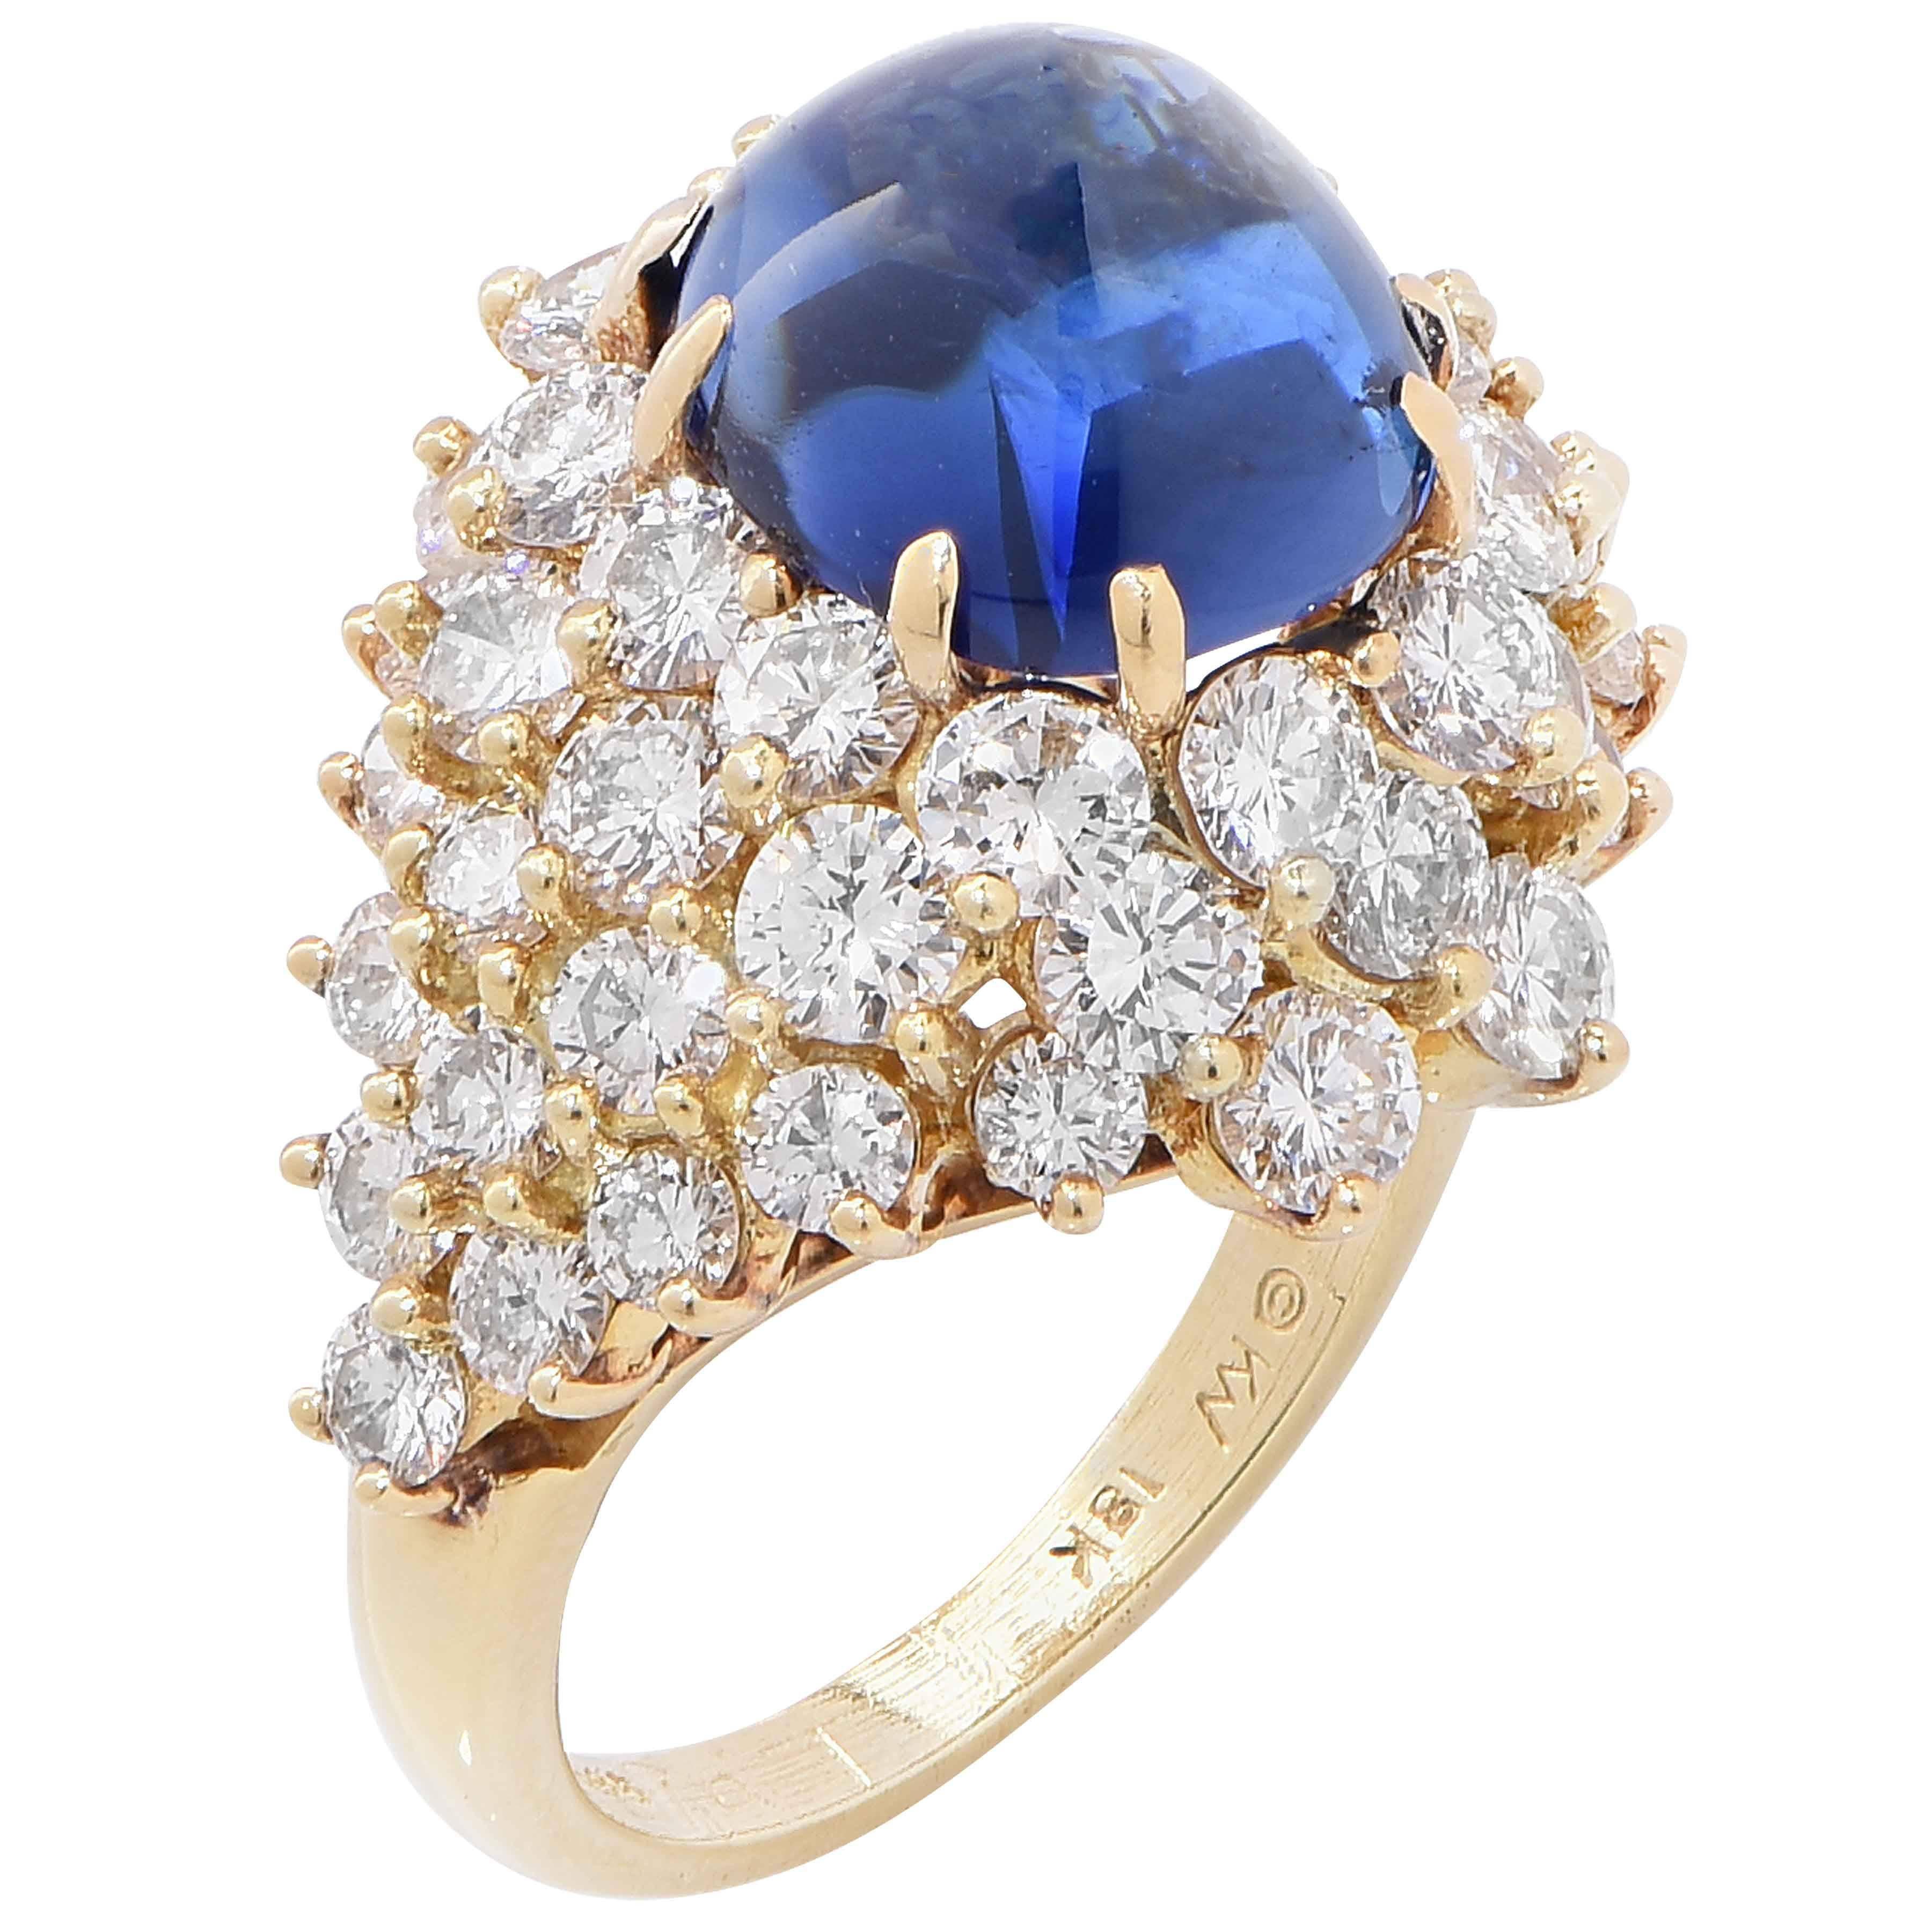 Kurt Wayne Approximately 9.8 Carat Natural Cabochon Sapphire Diamond Gold Ring For Sale